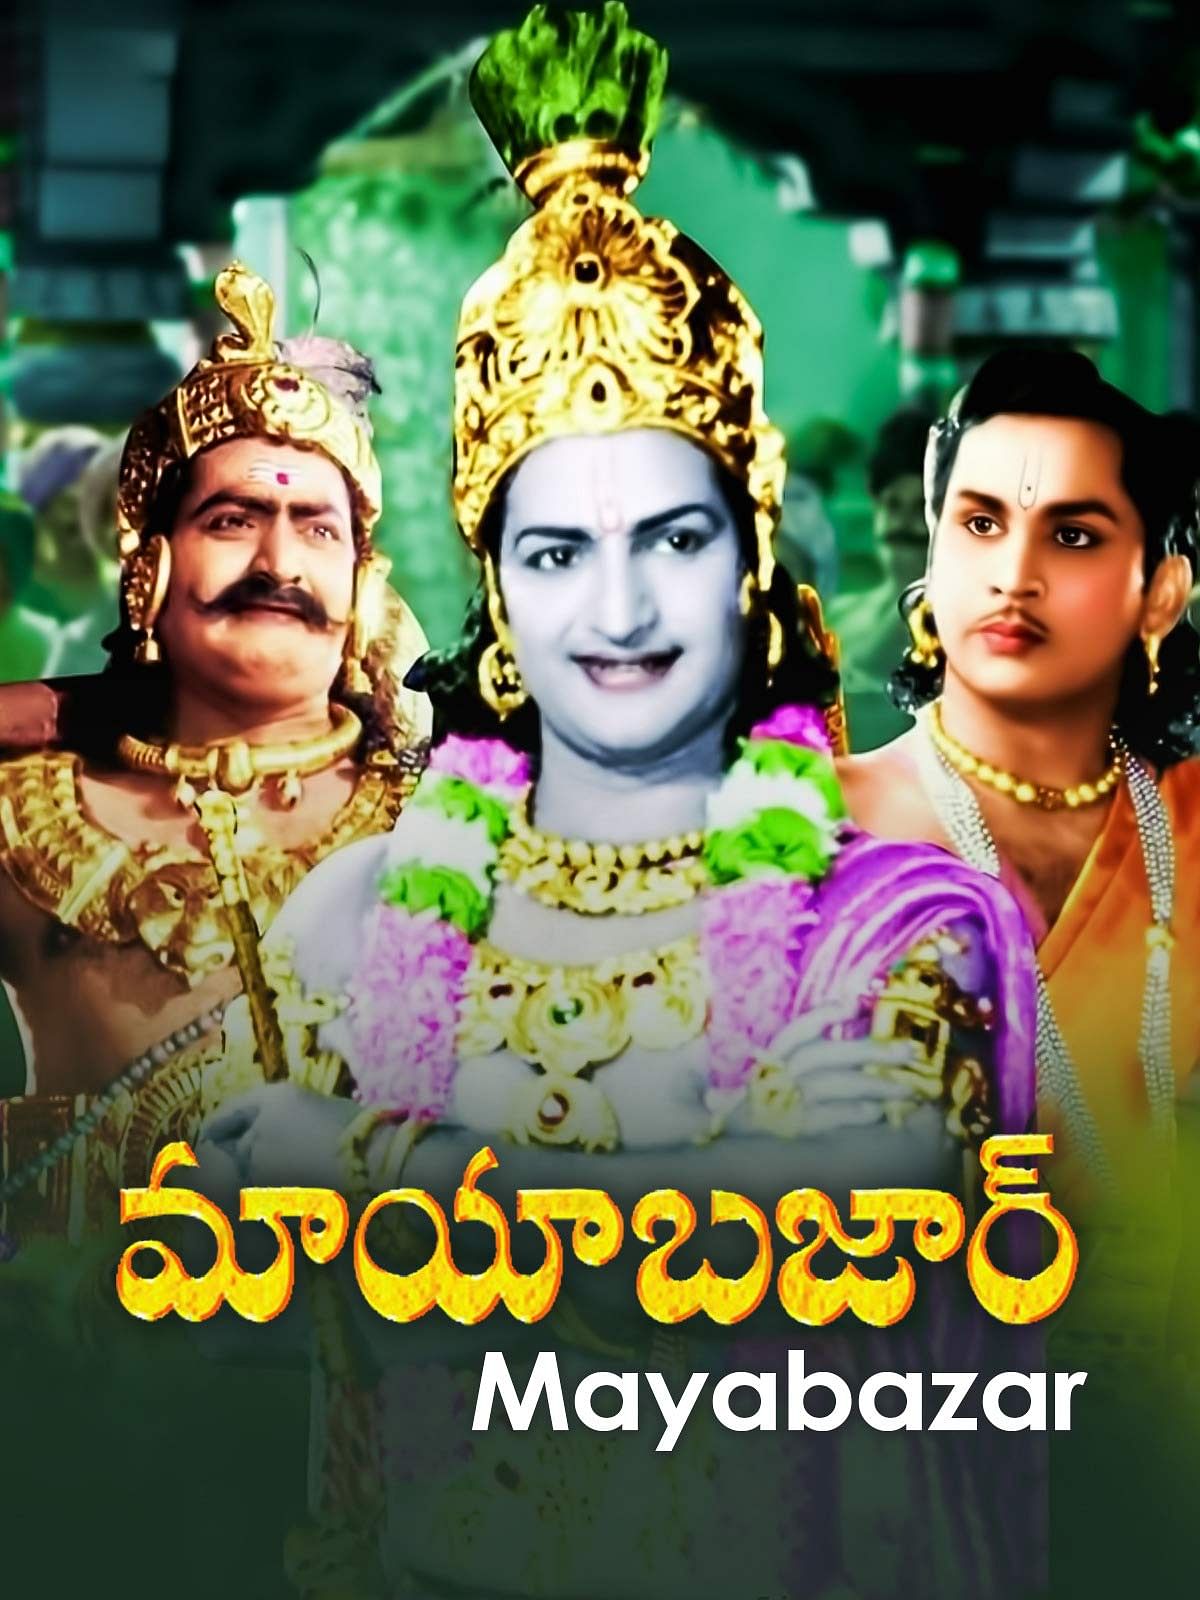 Mayabazar featured Sr NTR in the role Krishna